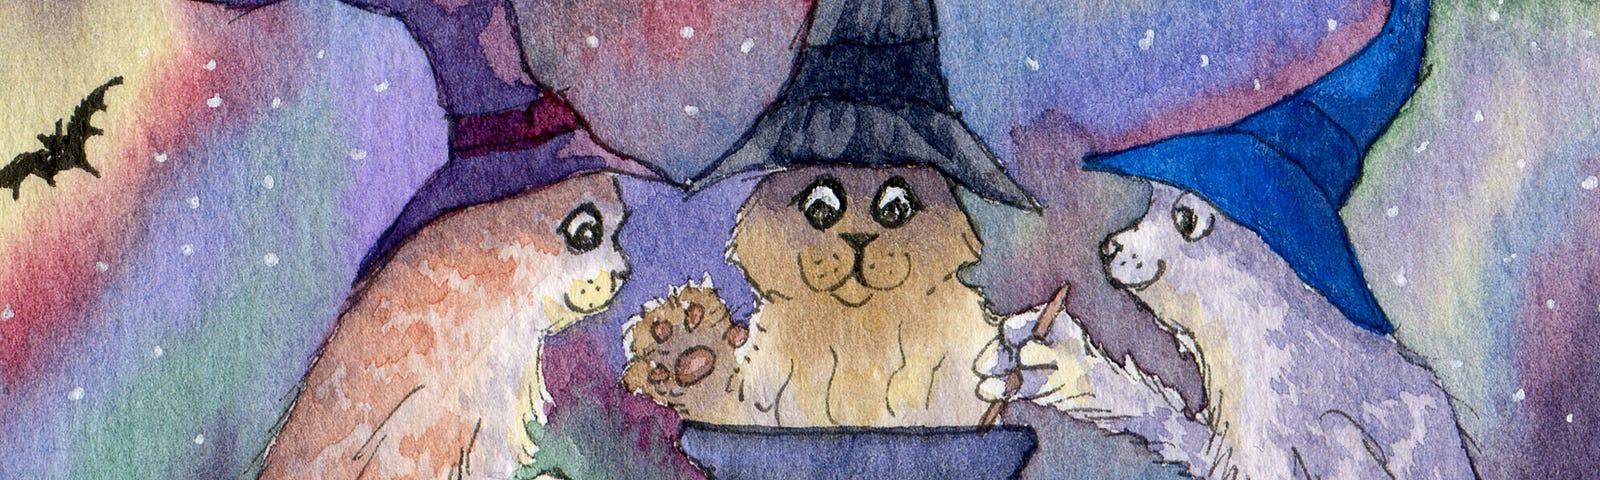 Three witch cats sit around a cauldron